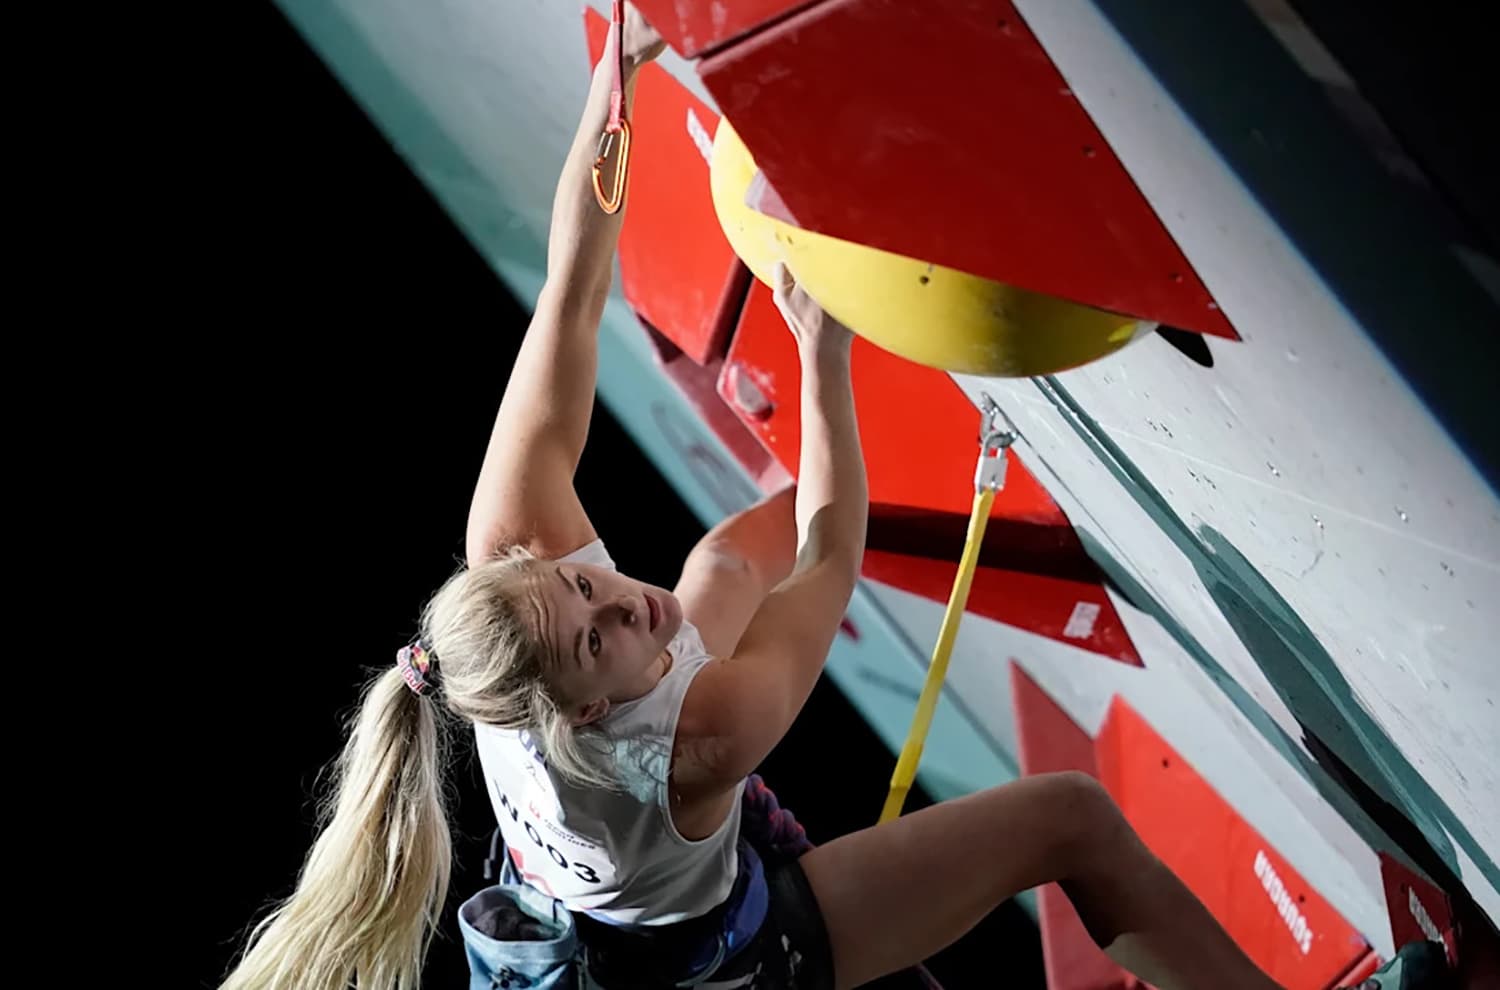 Shauna Coxsey sport climbing at Olympic Games